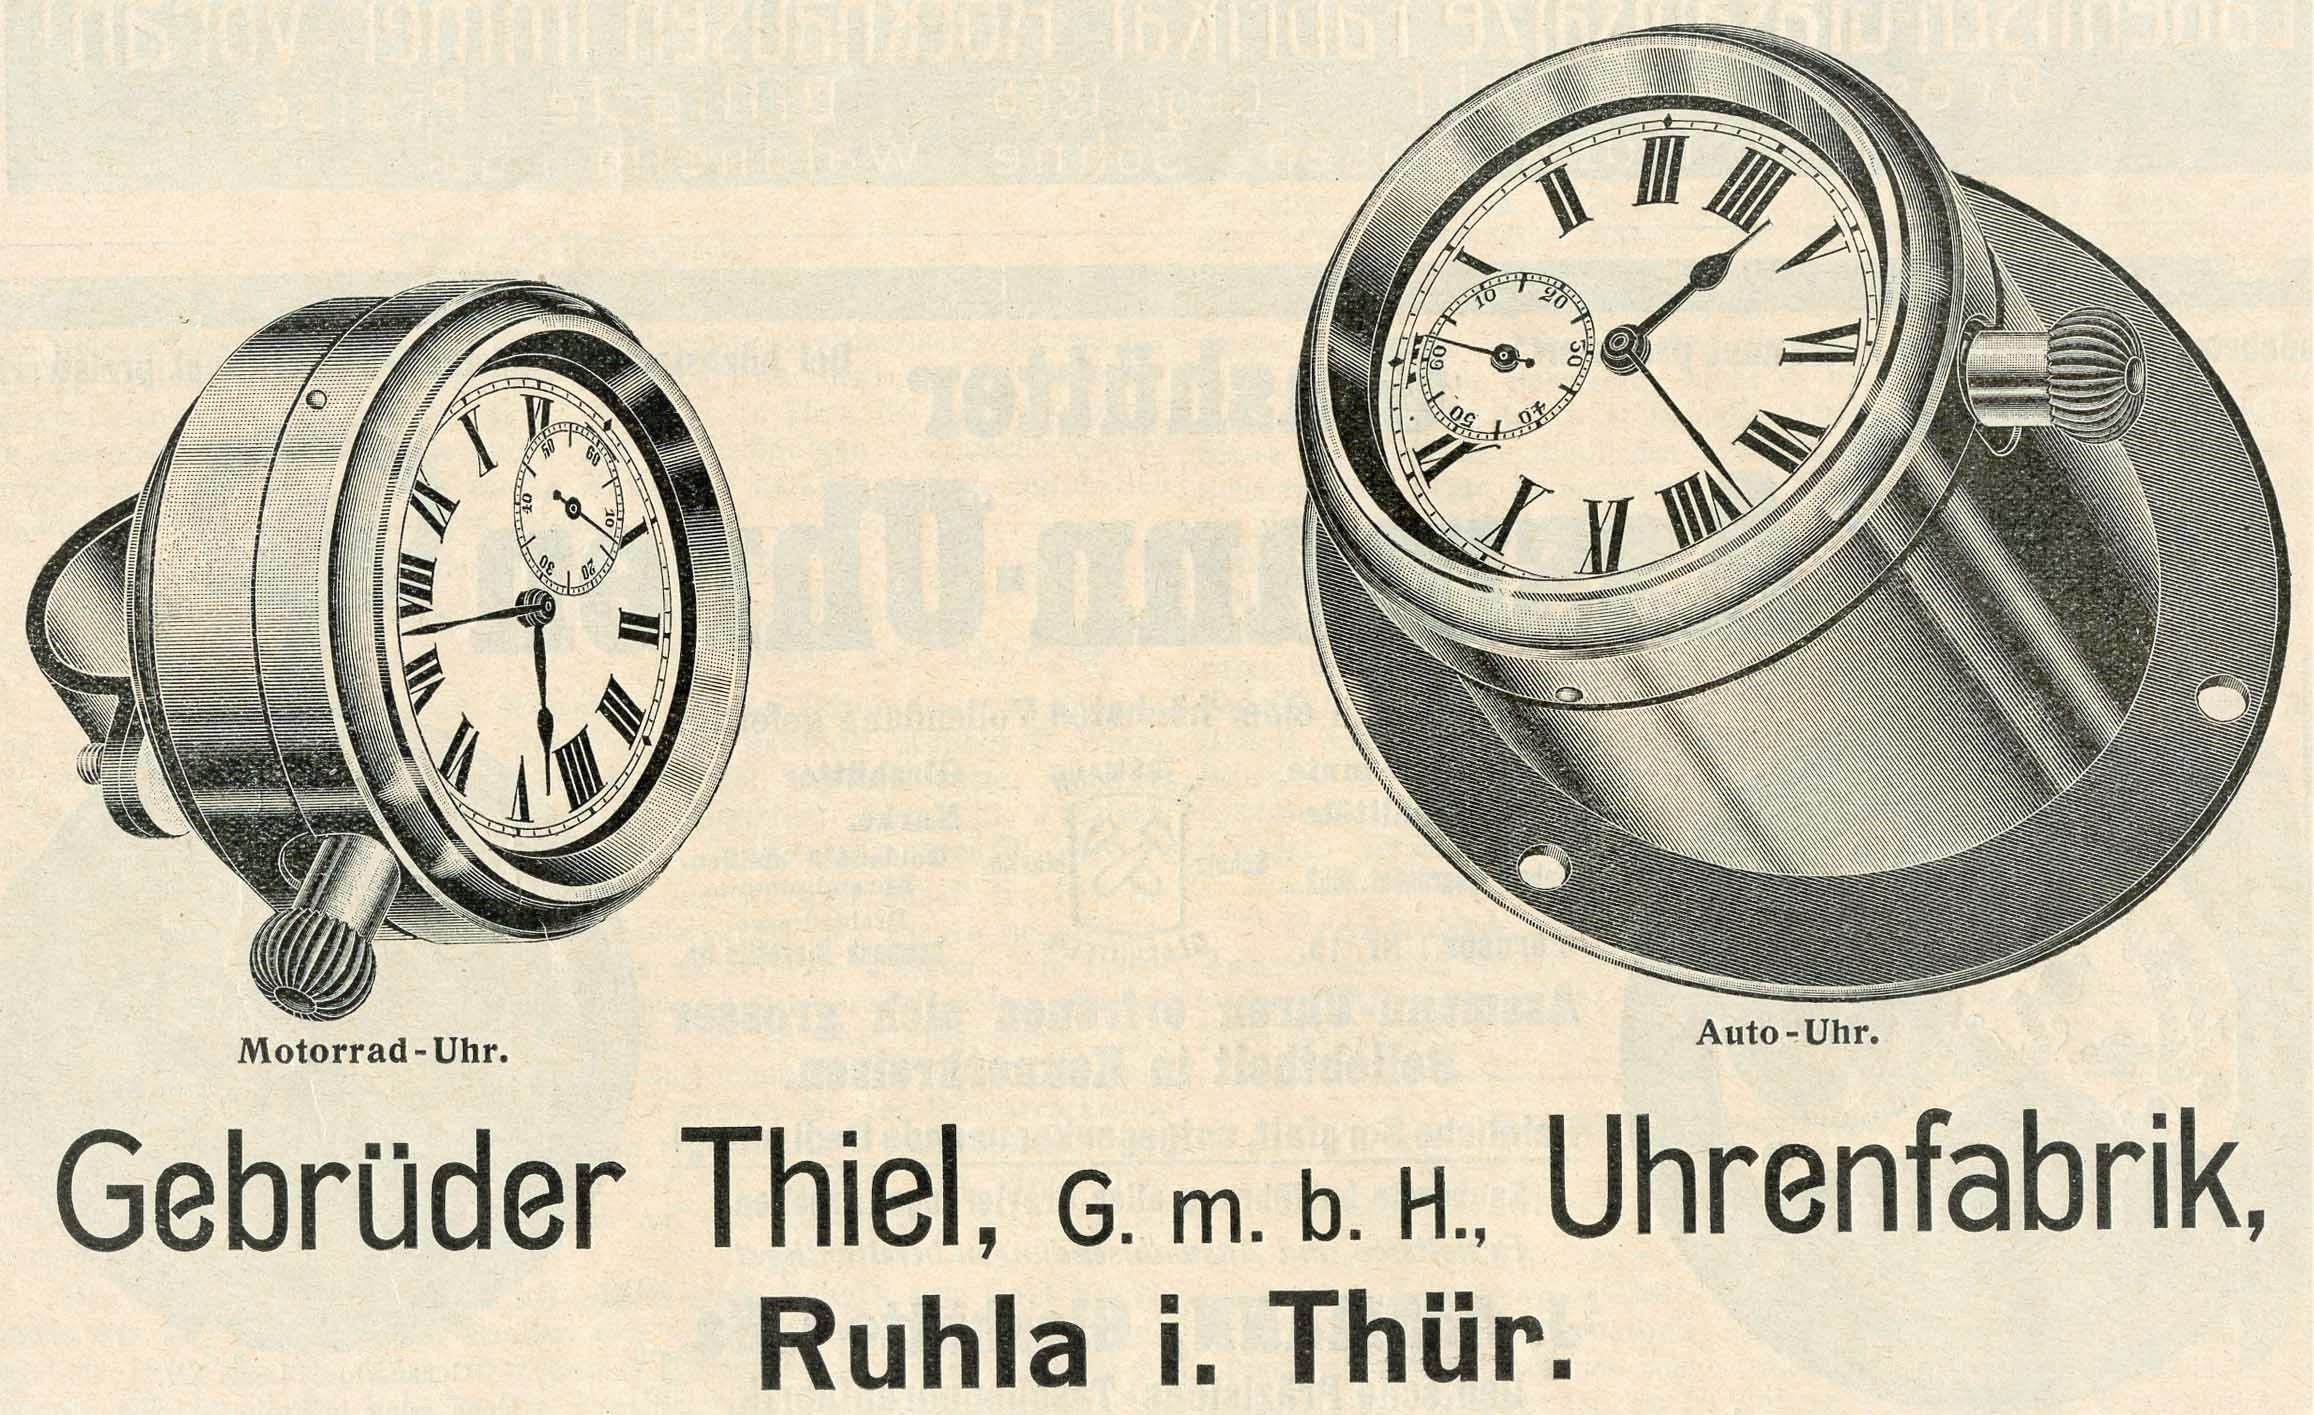 Thiel Autouhr Motorad Uhr / Car and Motorbike clocks 1930s